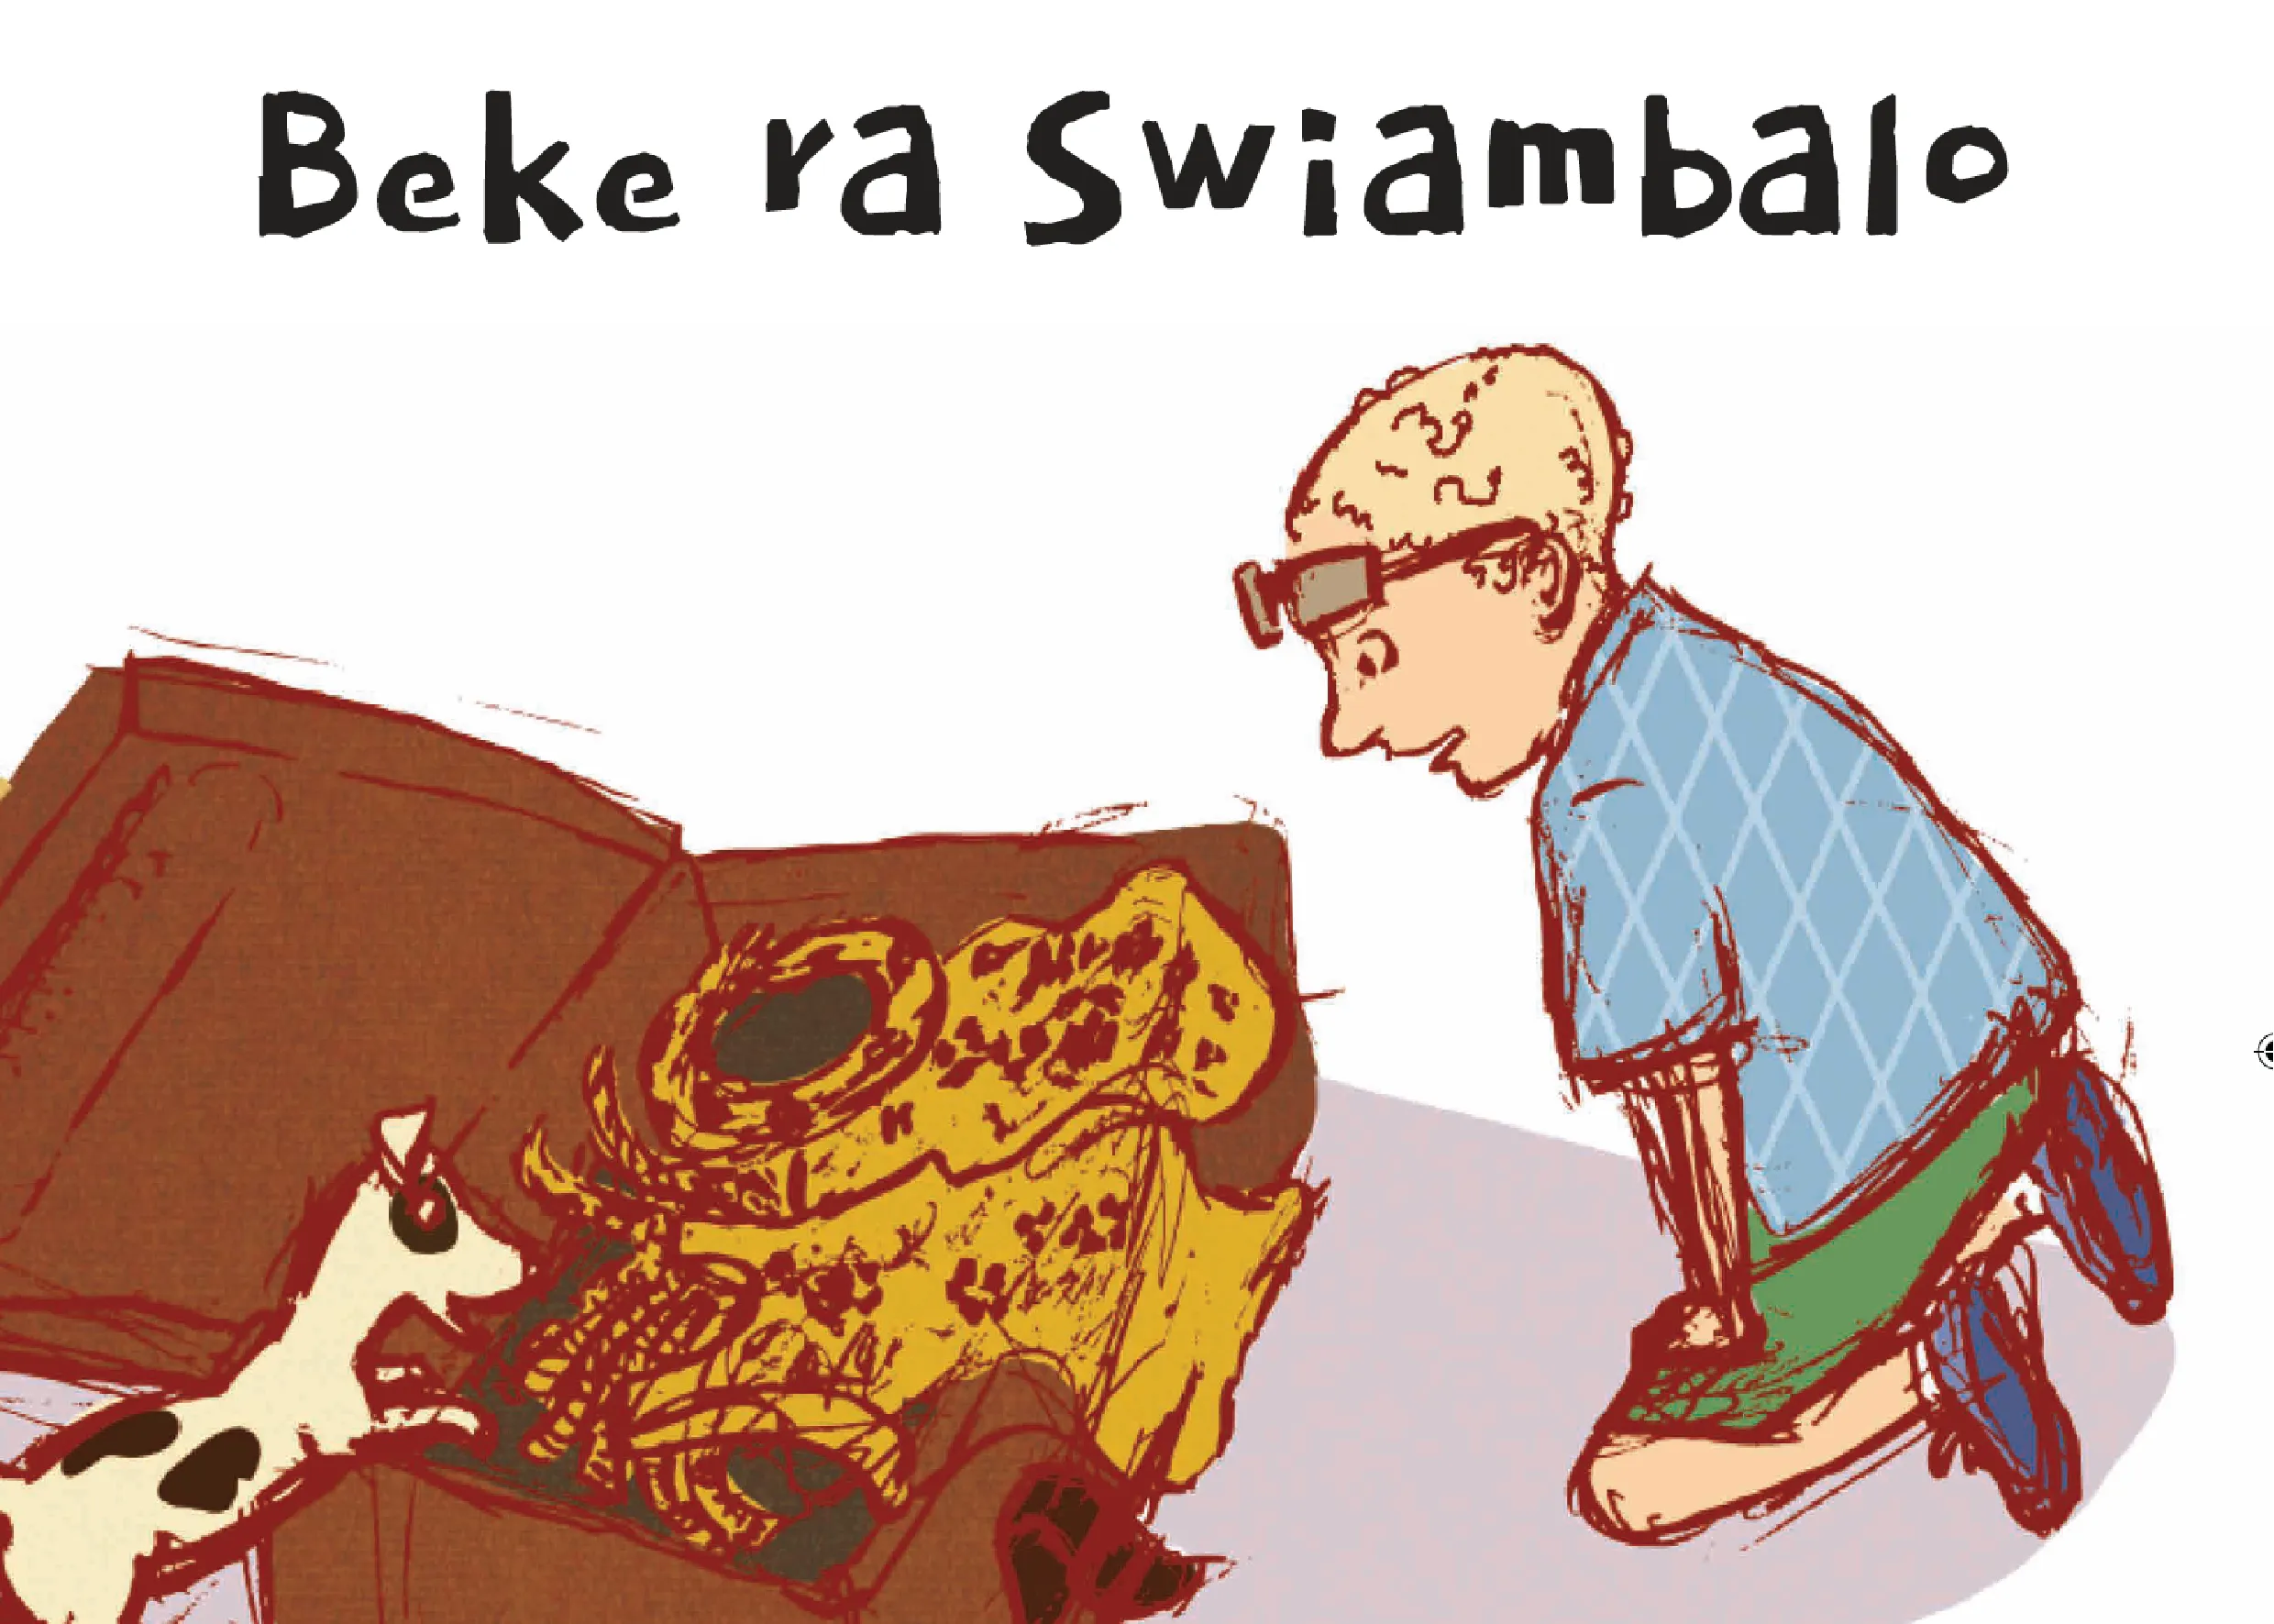 Beke ra Swiambalo